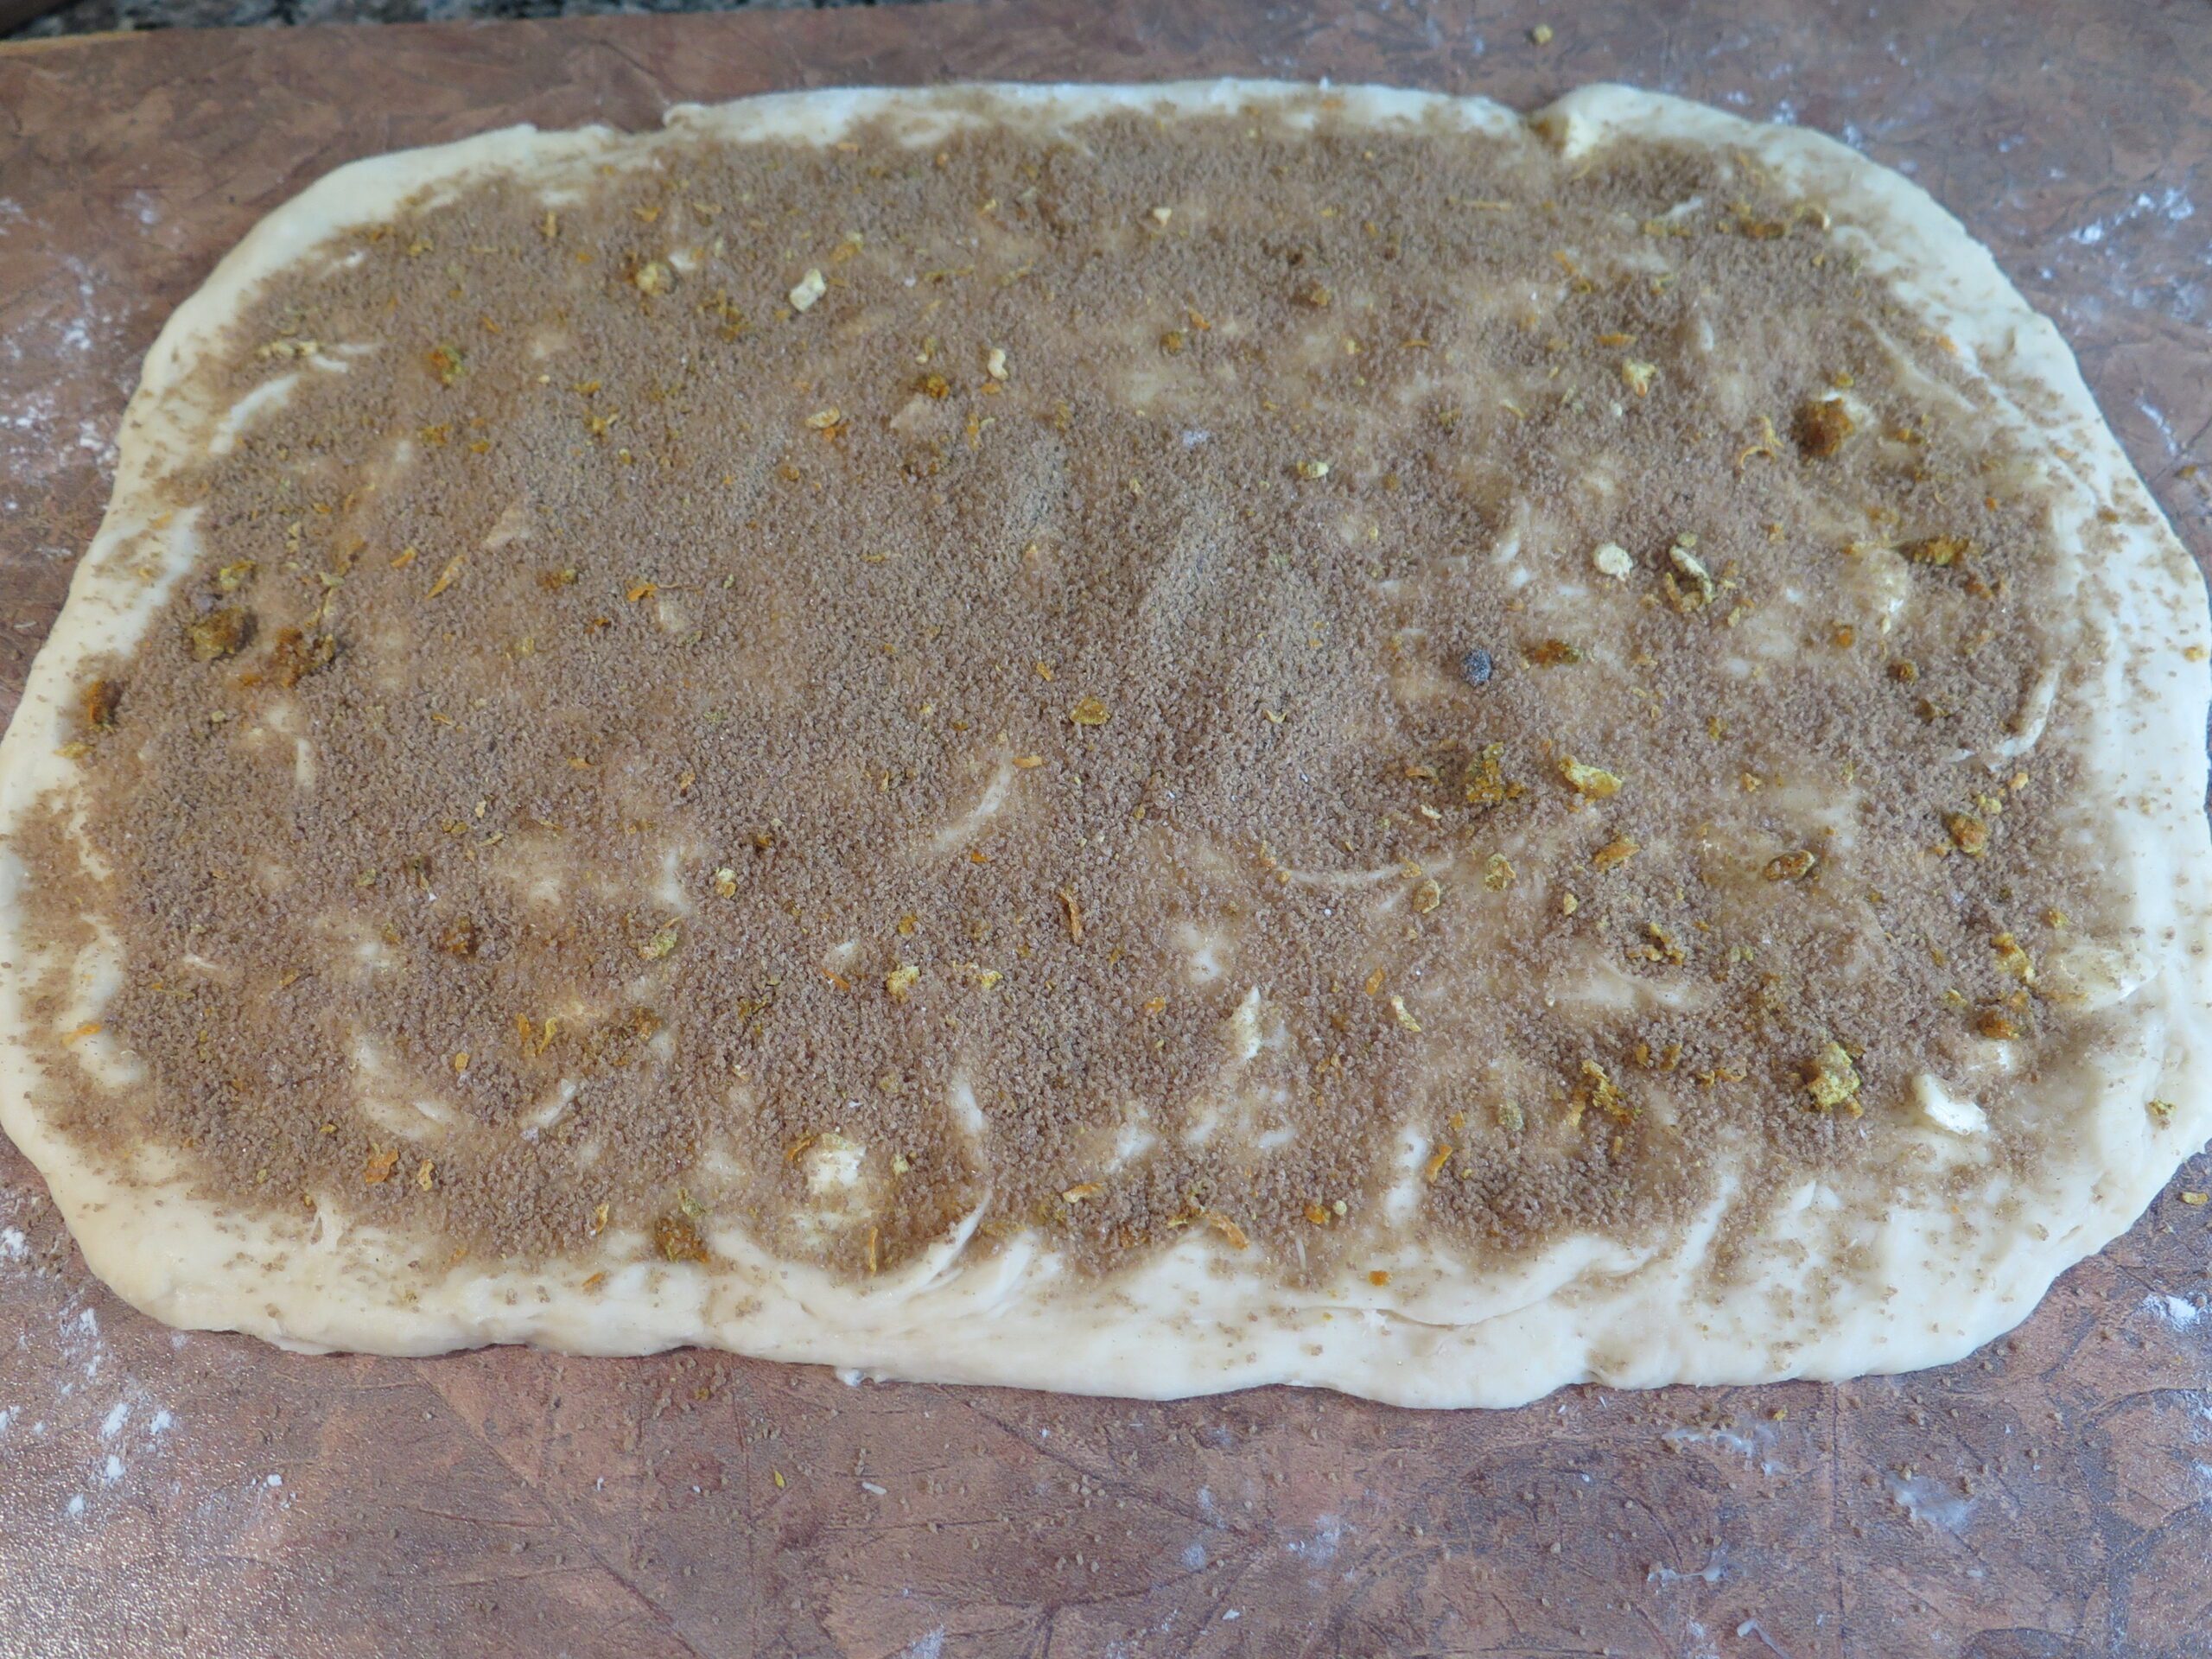 Cardamom filling on dough